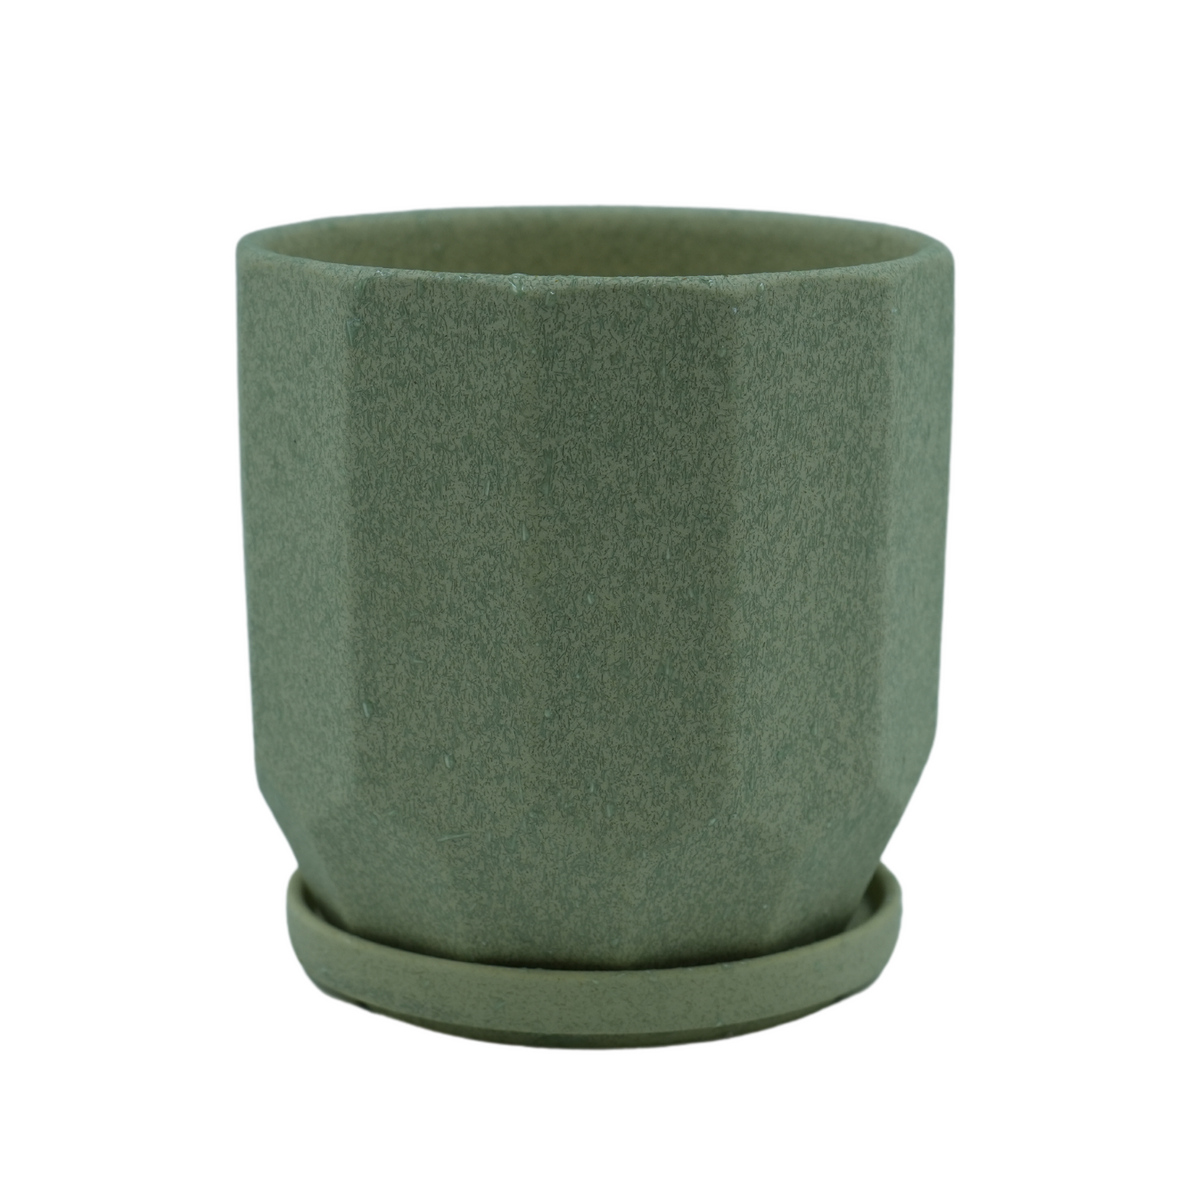 Designer Ceramic Pot (Green, Matt Finish,Small) for Home & Indoor Plant Decor